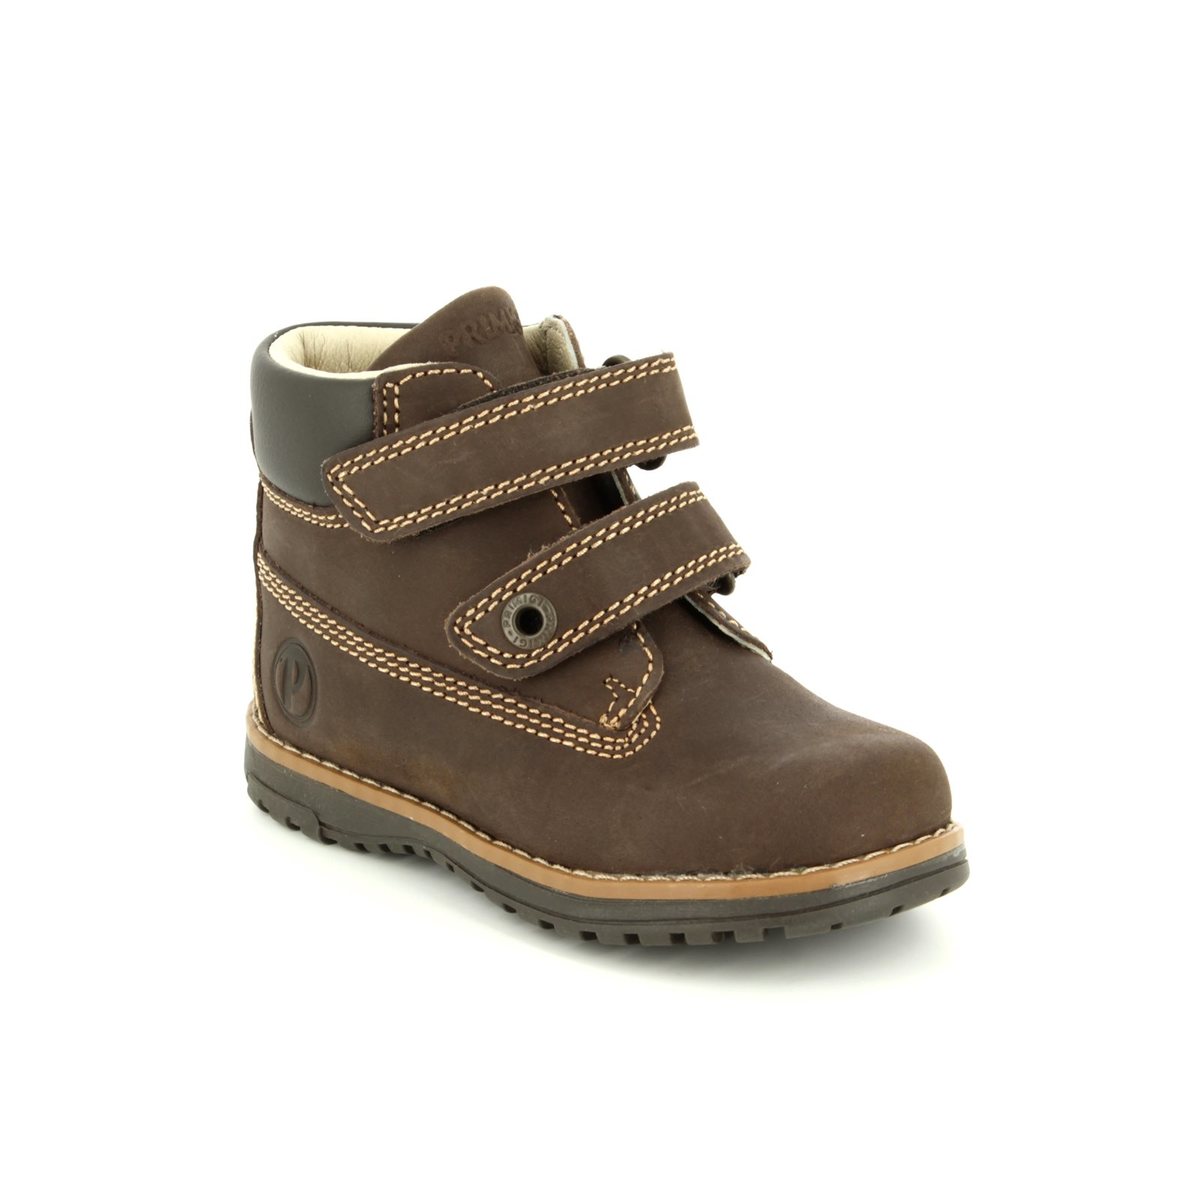 Primigi Aspy Brown Kids Toddler Boys Boots 6410177-20 in a Plain  in Size 30